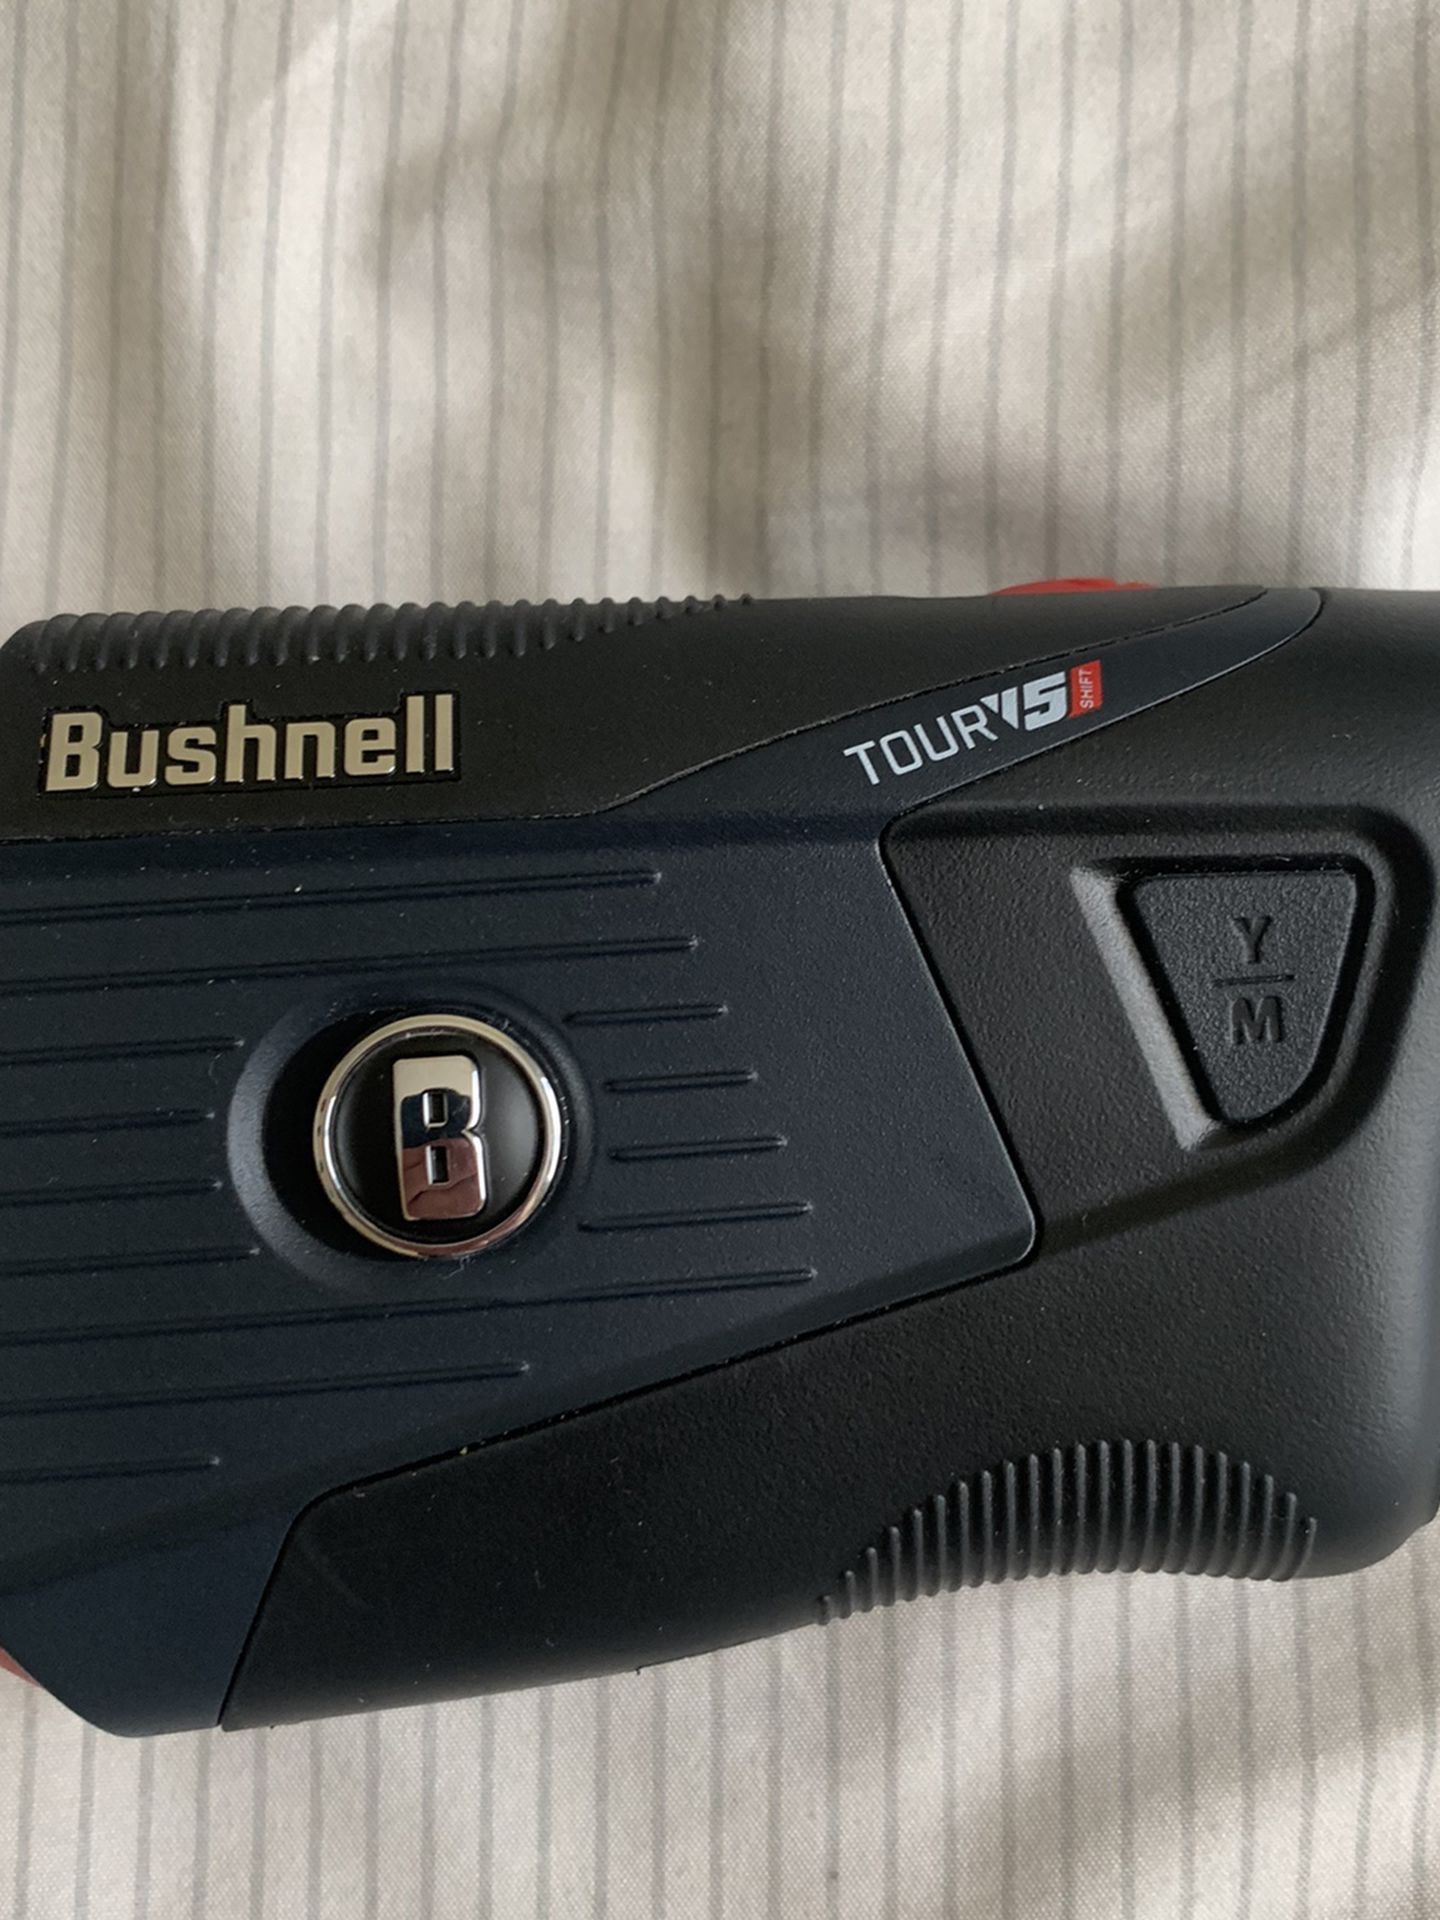 Bushnell Tour v5 Rangefinder